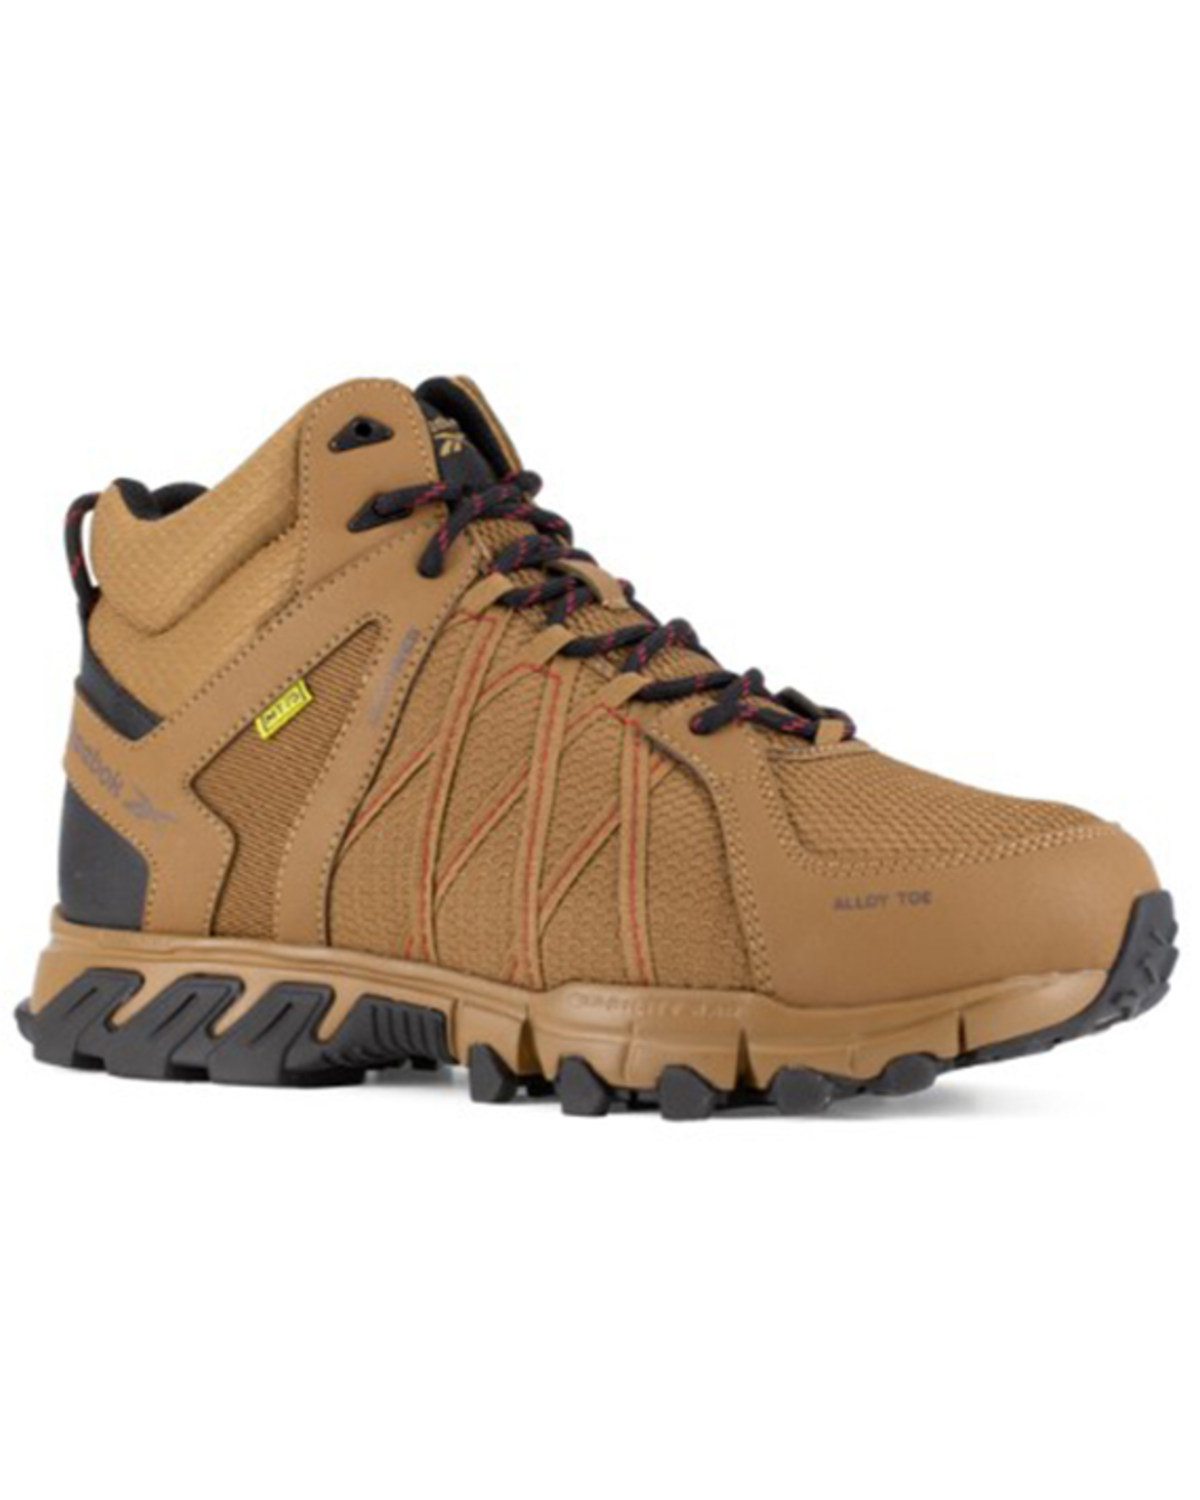 Reebok Men's Trailgrip Athletic Hiker Work Boots - Alloy Toe